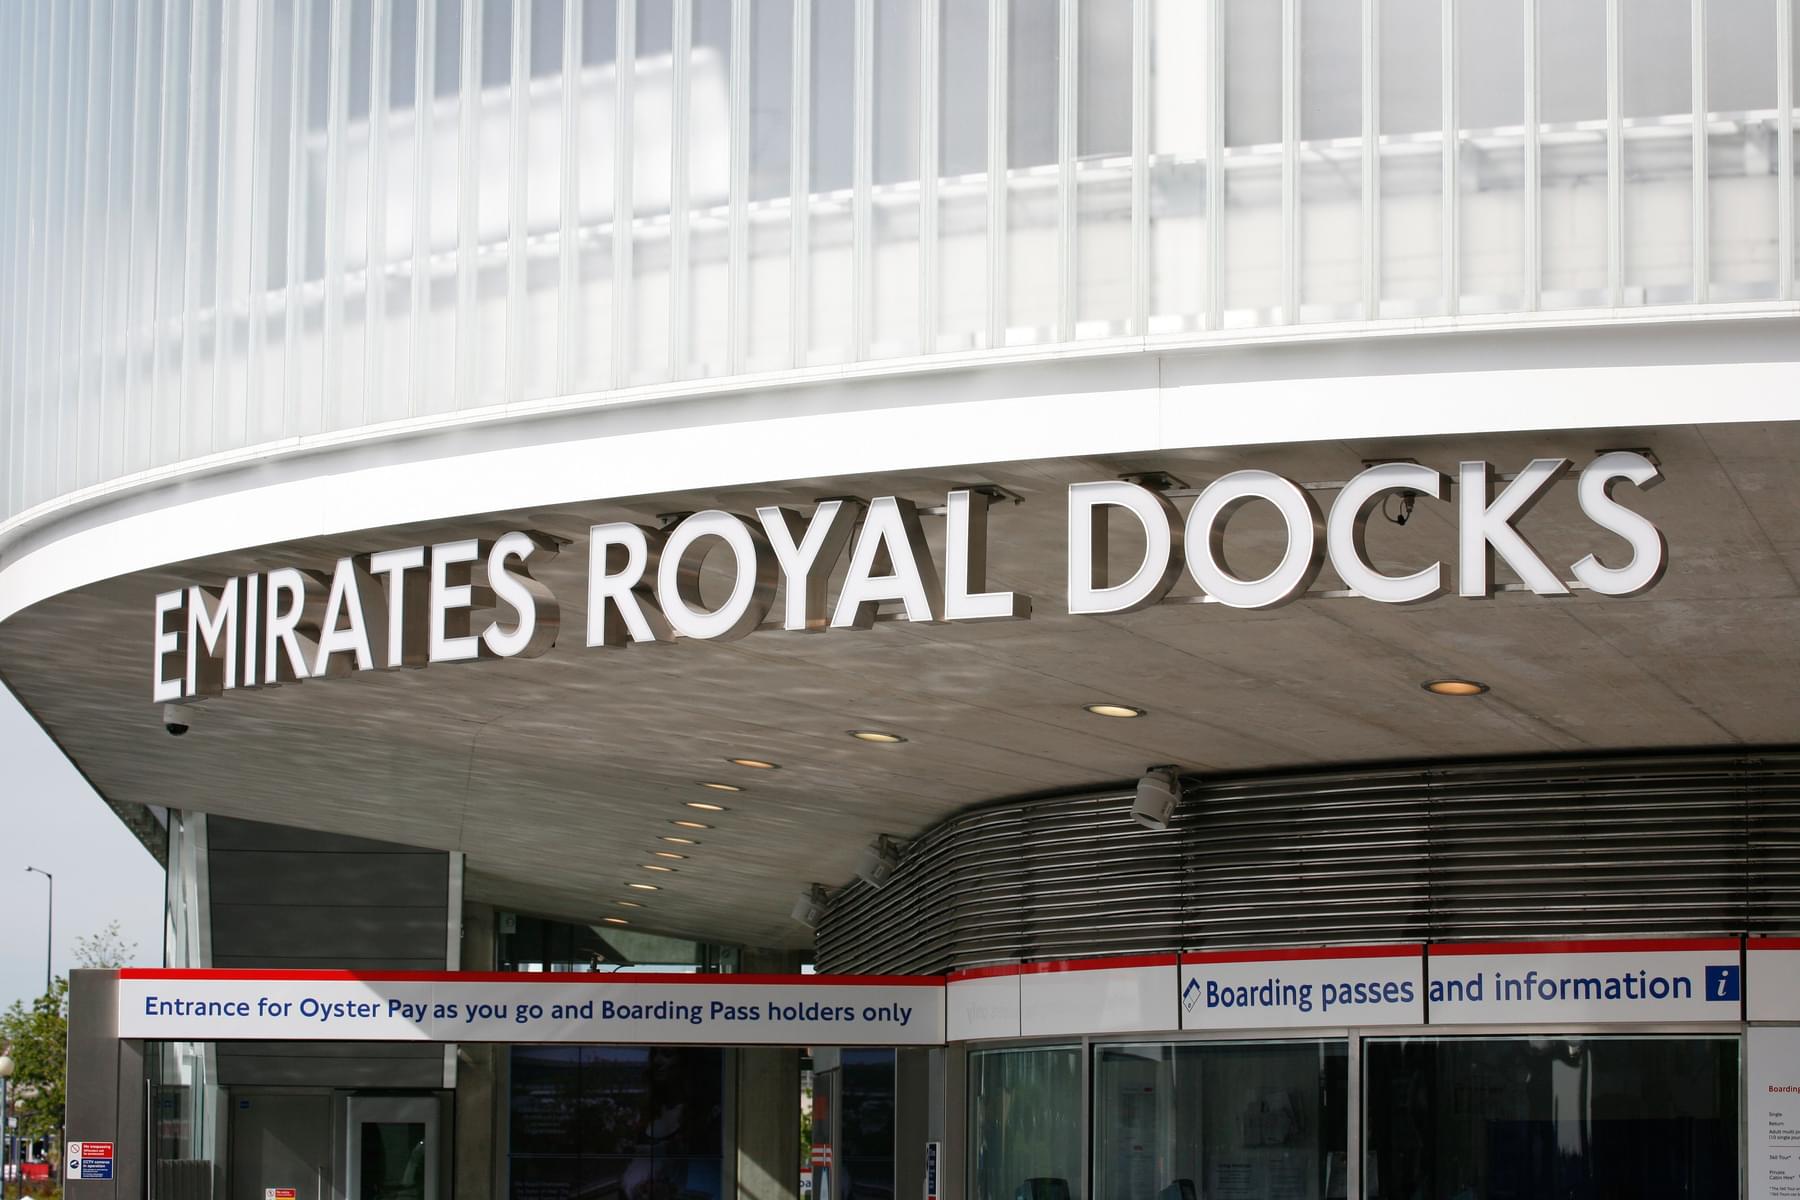 Royal Docks